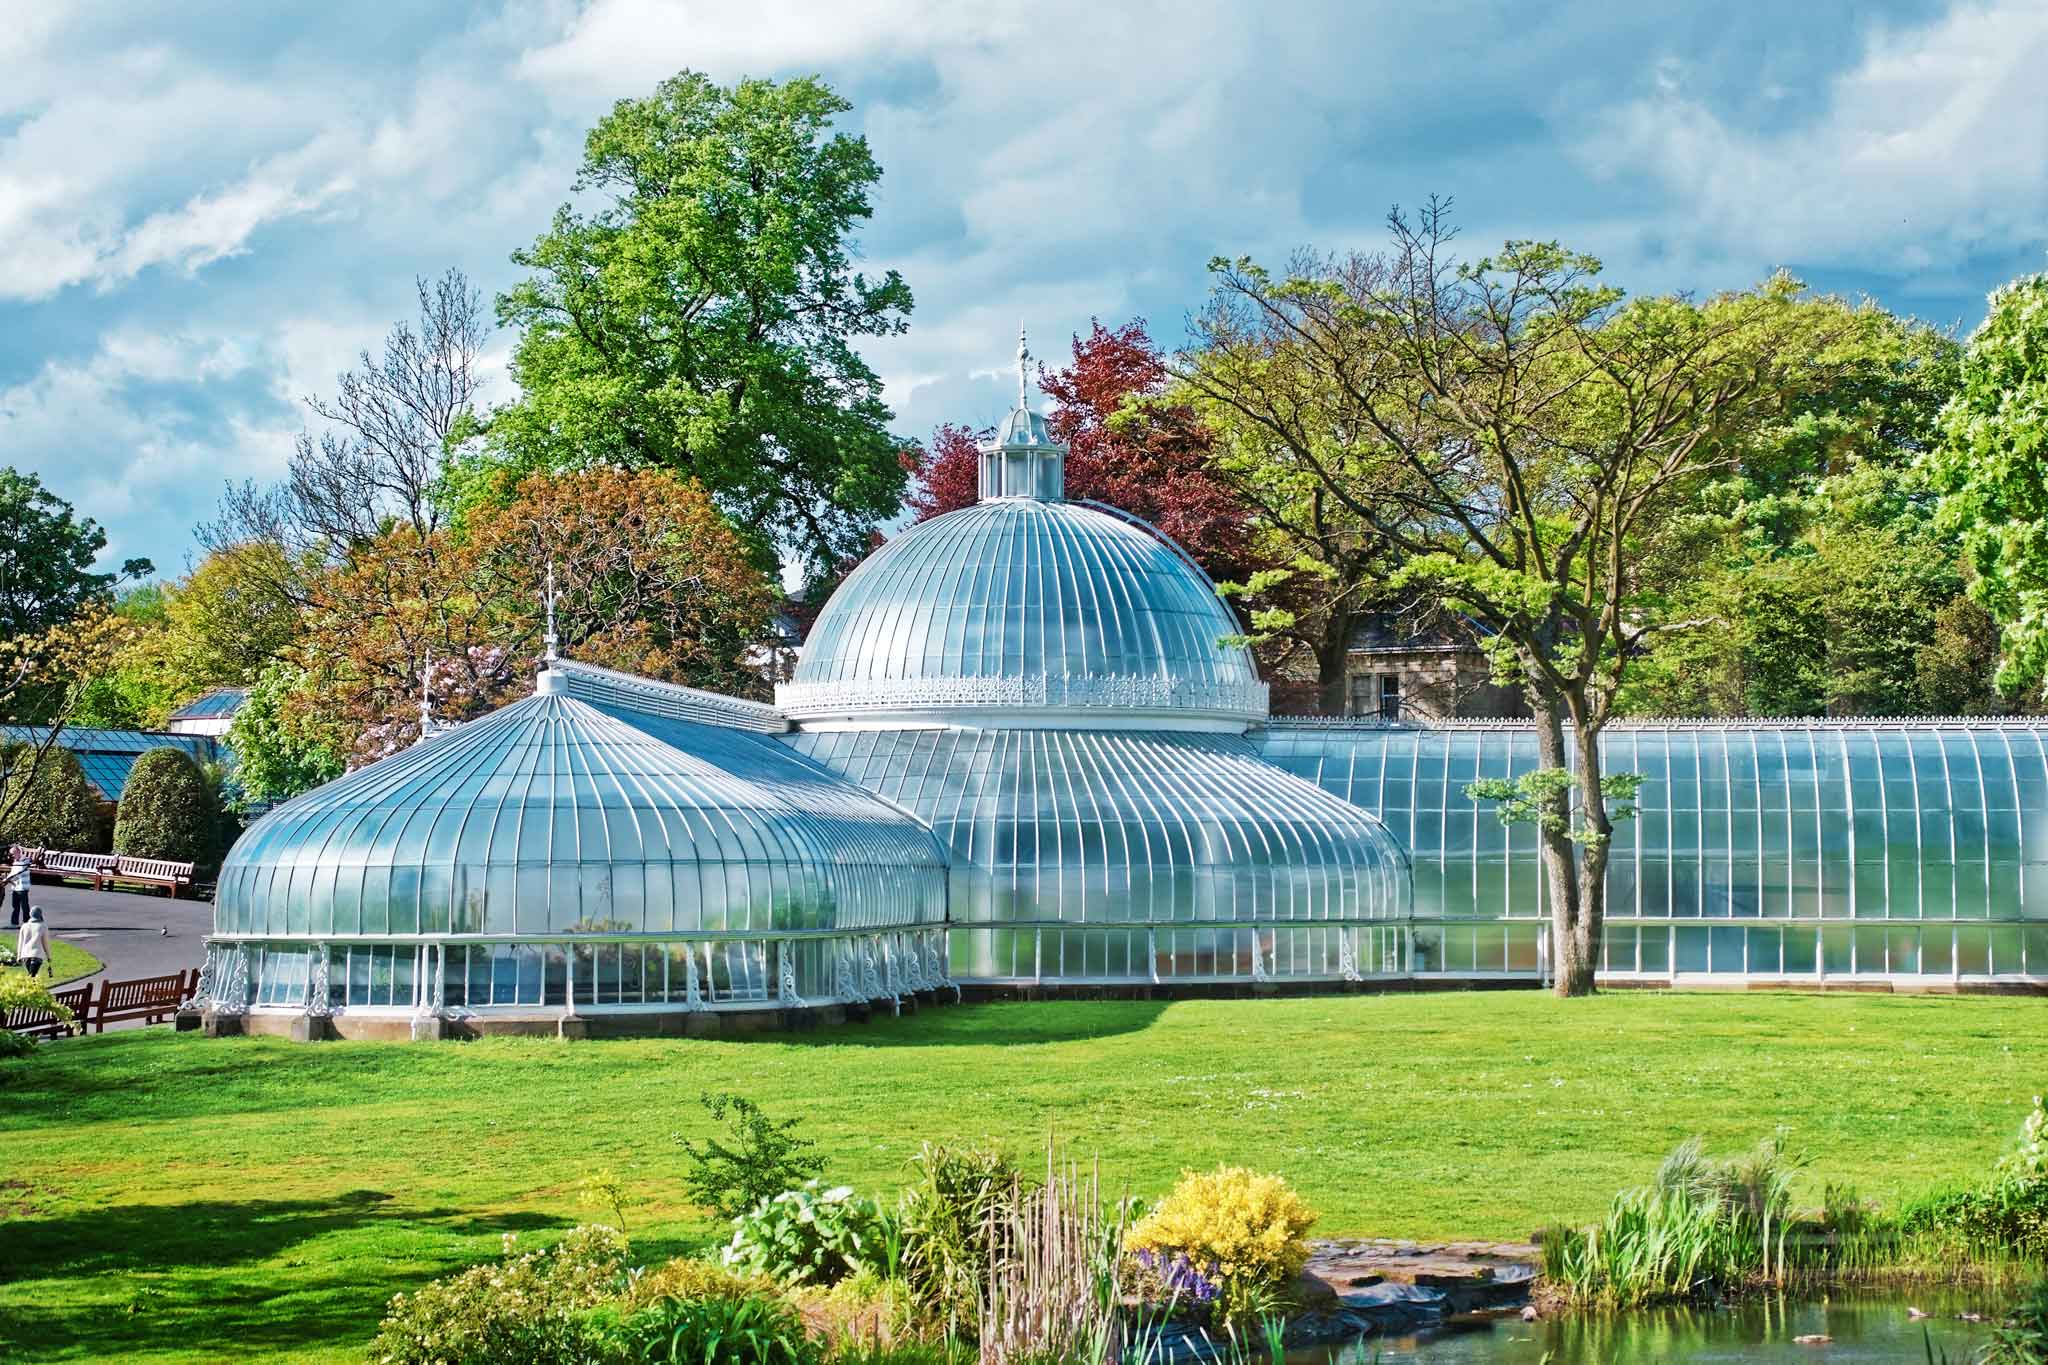 Glasgow Botanic Gardens. Photo: iPhoto.com/RomanBabakin